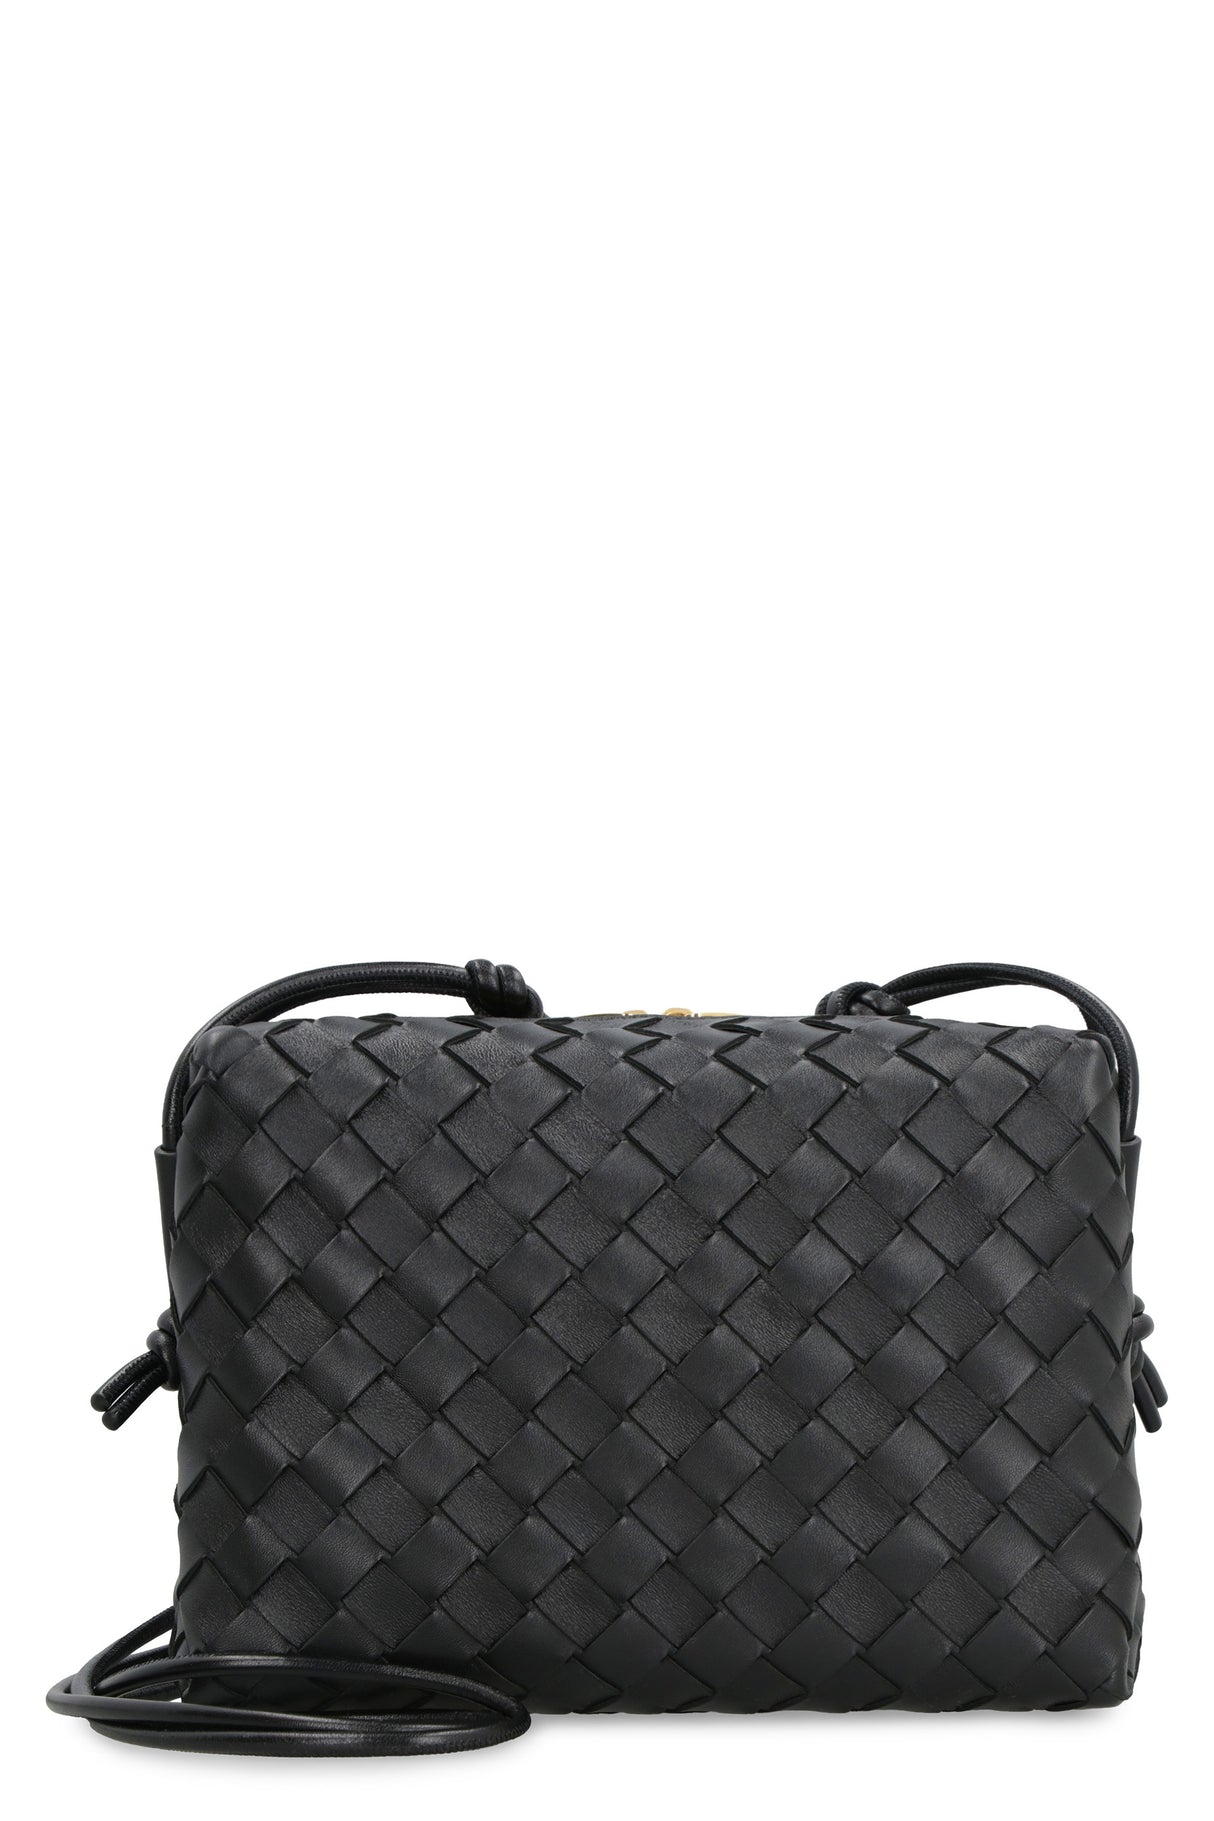 BOTTEGA VENETA Chic Black Leather Mini Loop Crossbody Bag for Women